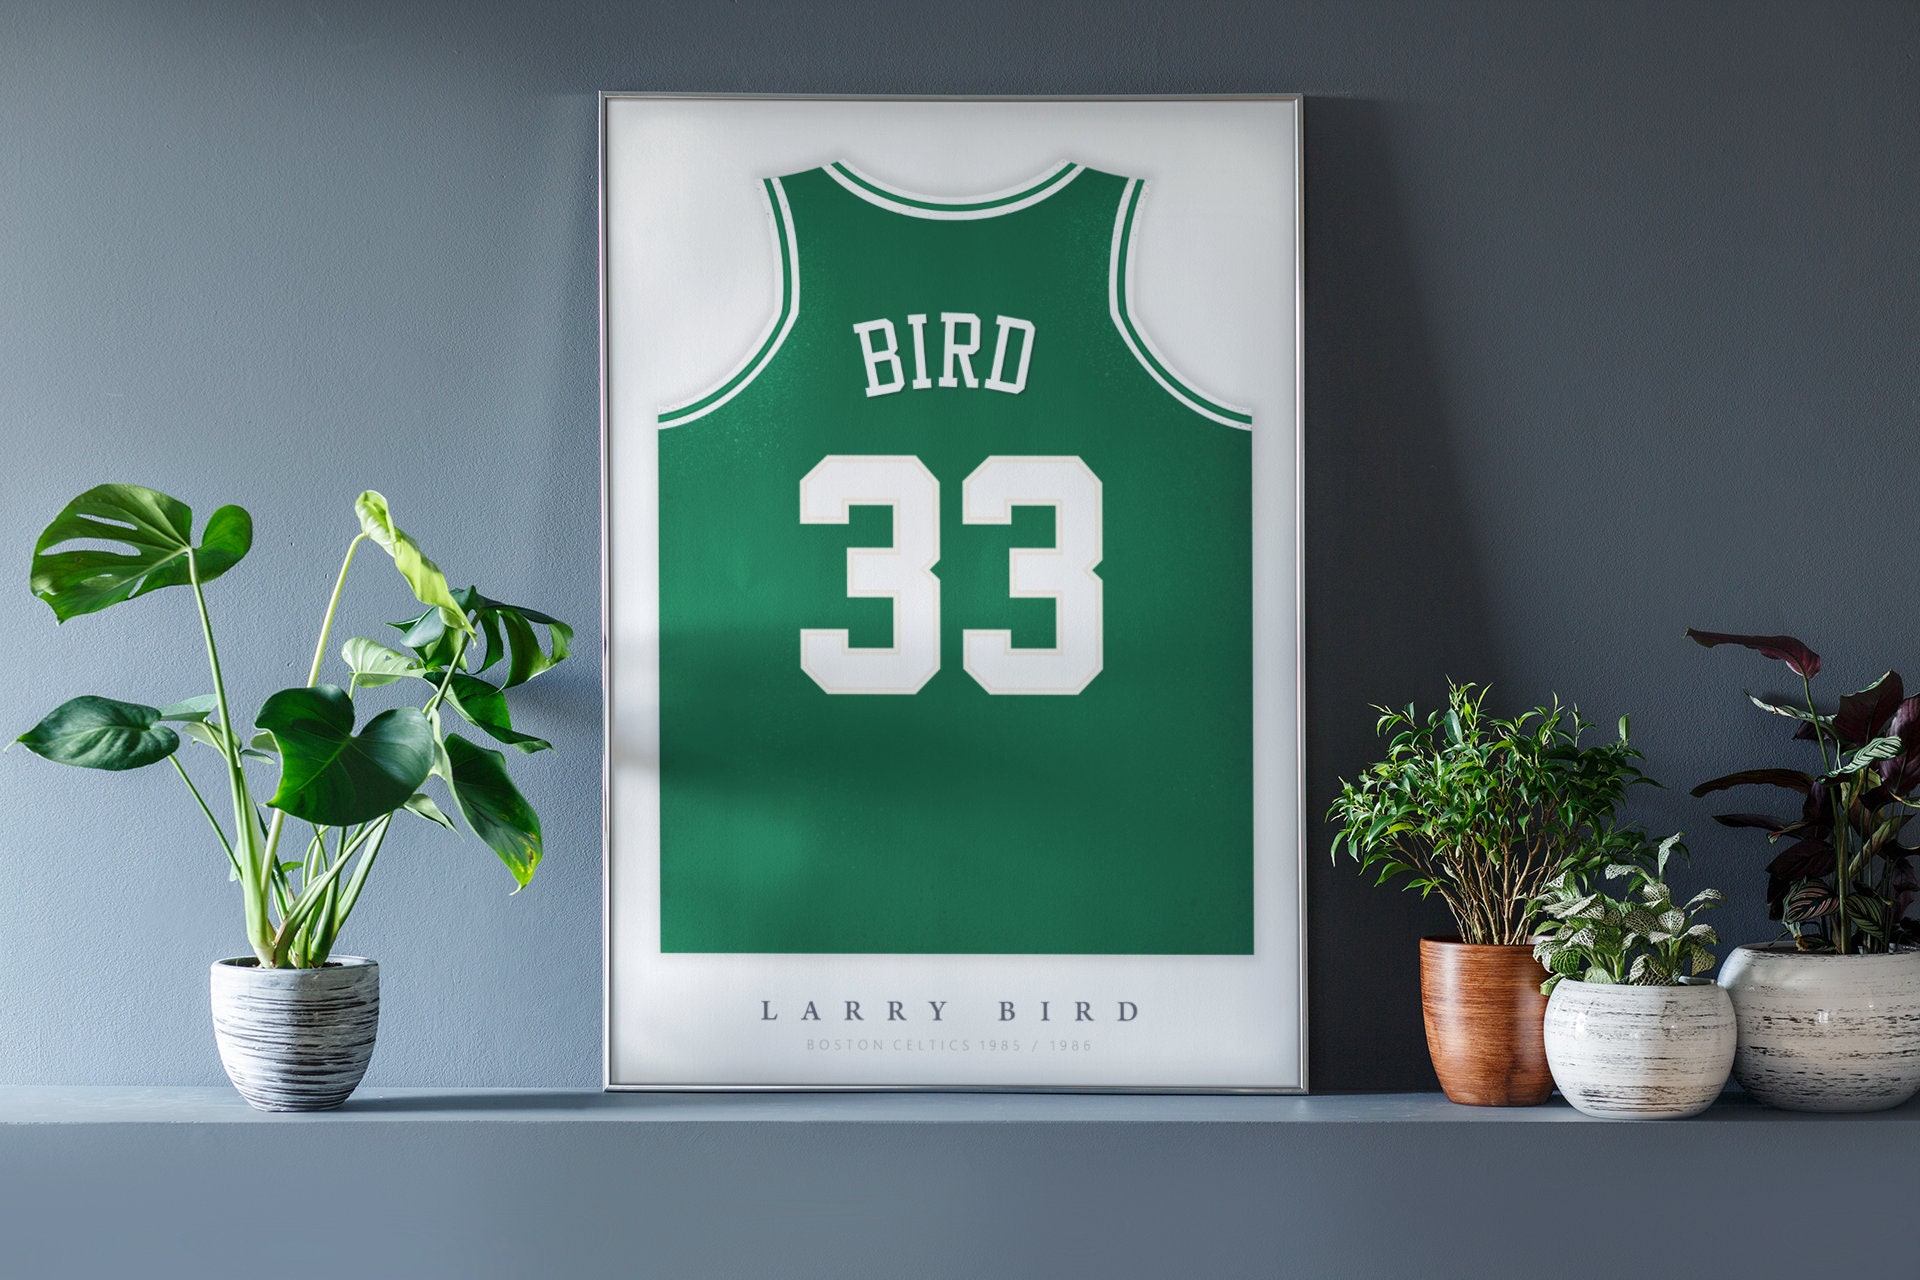 Legends Never Die Larry Bird Celtics Framed Memorabilia